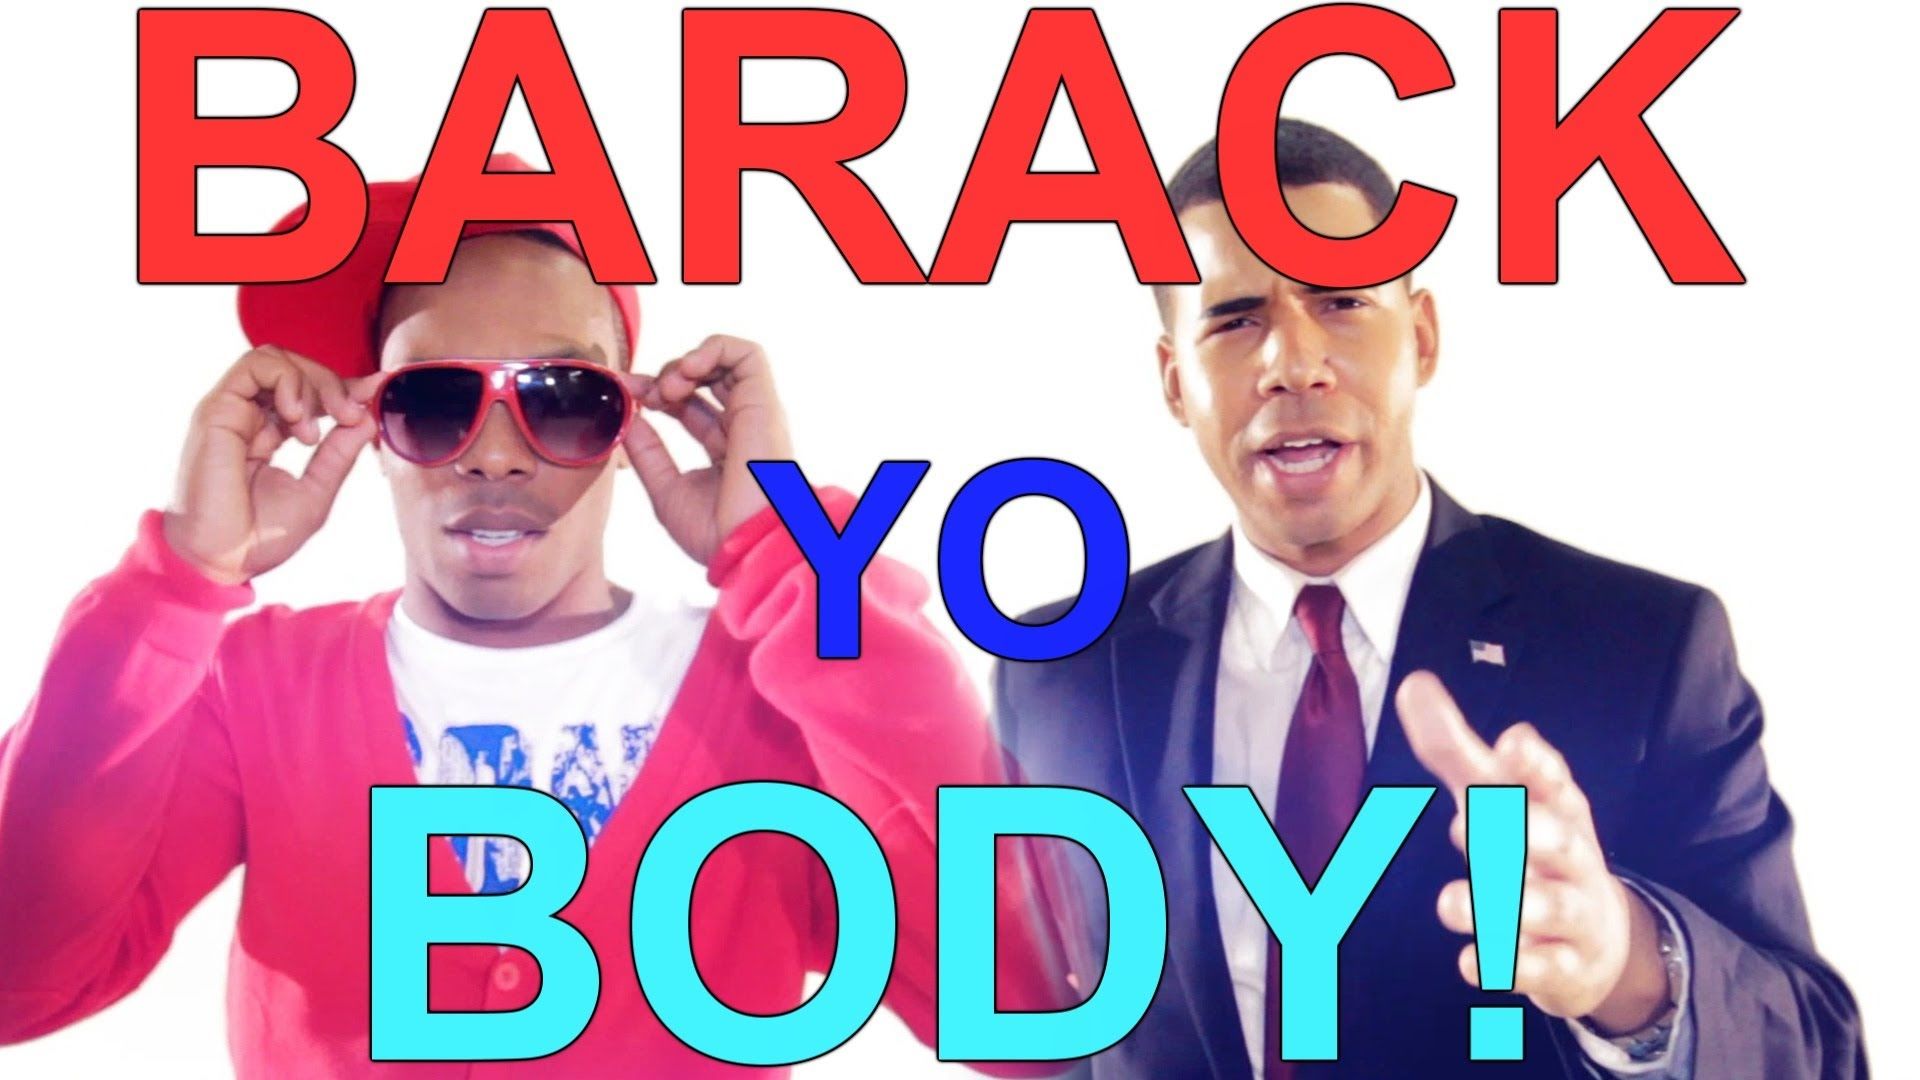 Barack Yo' Body by Todrick Hall Feat. Alphacat (흥겨움 클럽 비트 엽기 흥함 버락 오바마 알파캣 토드릭 홀)